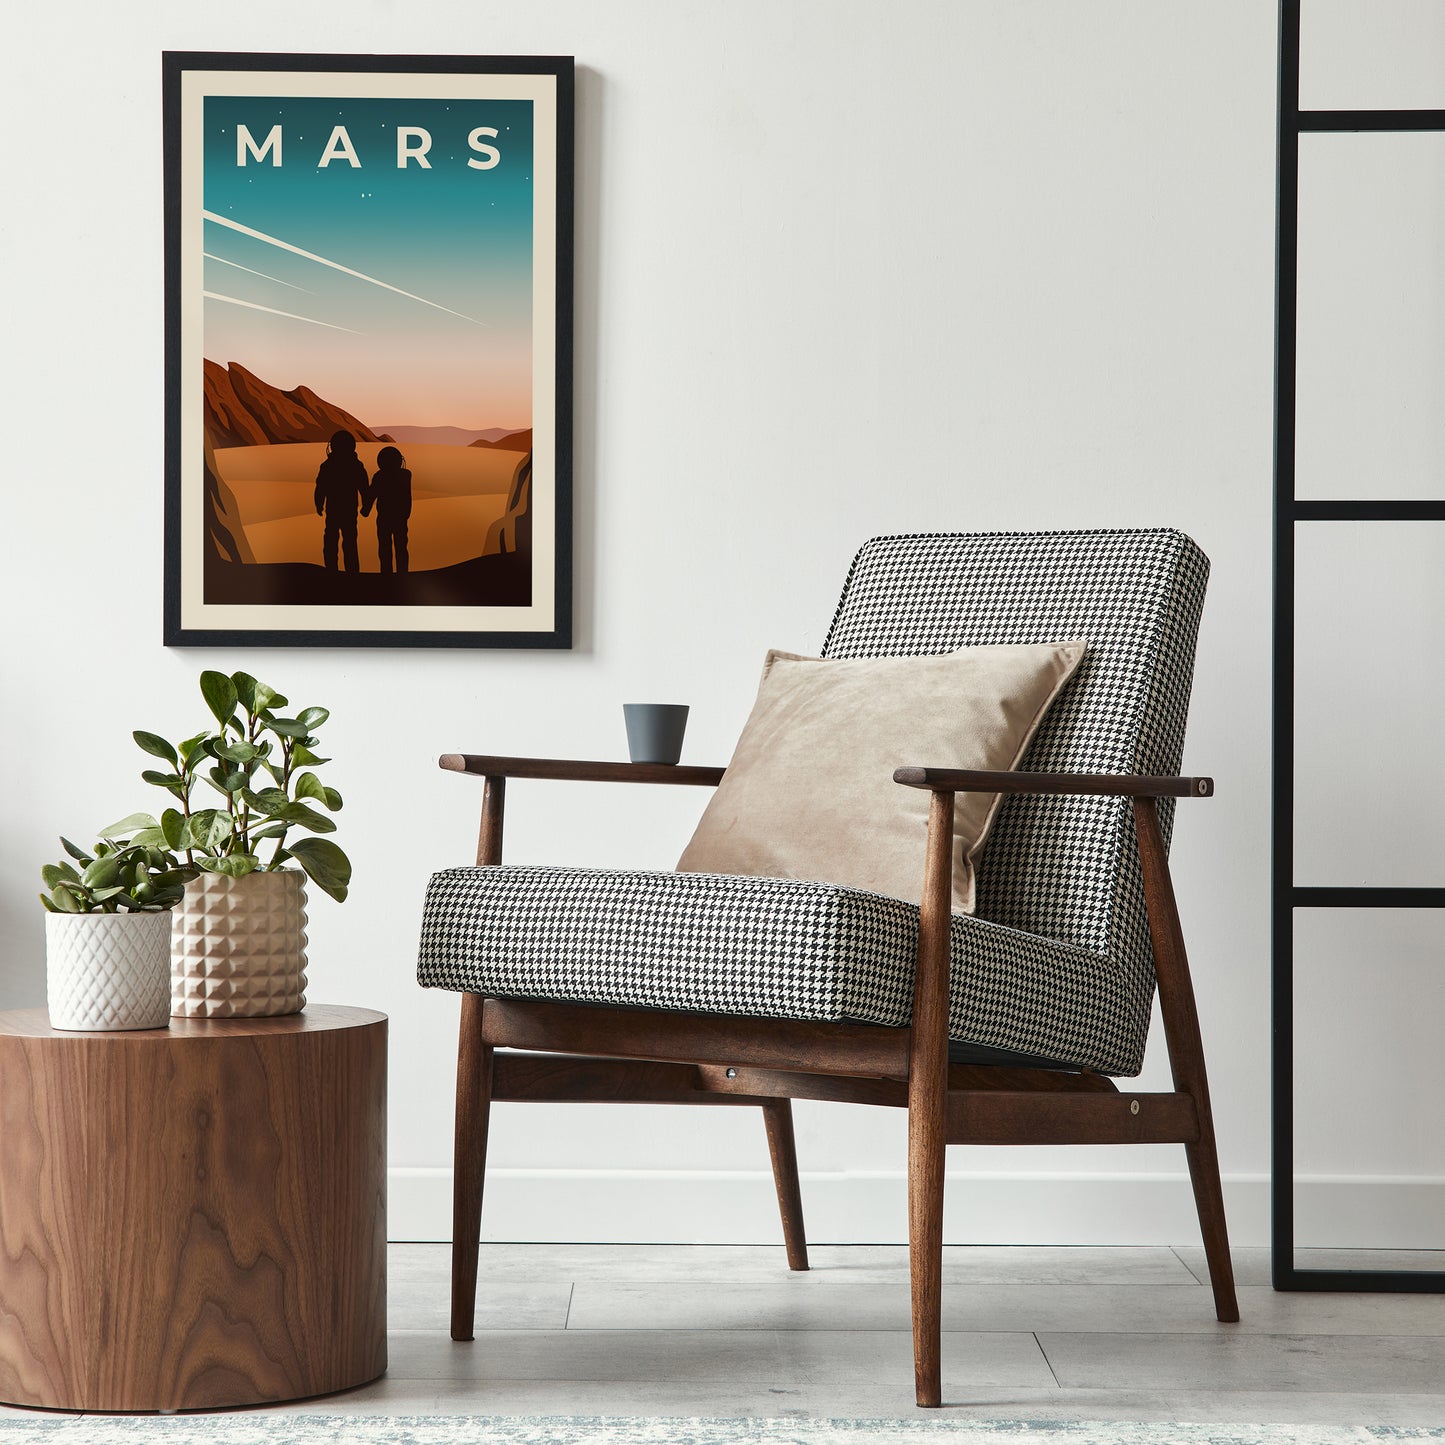 Minimal Mars Poster - Space Travel Nerd